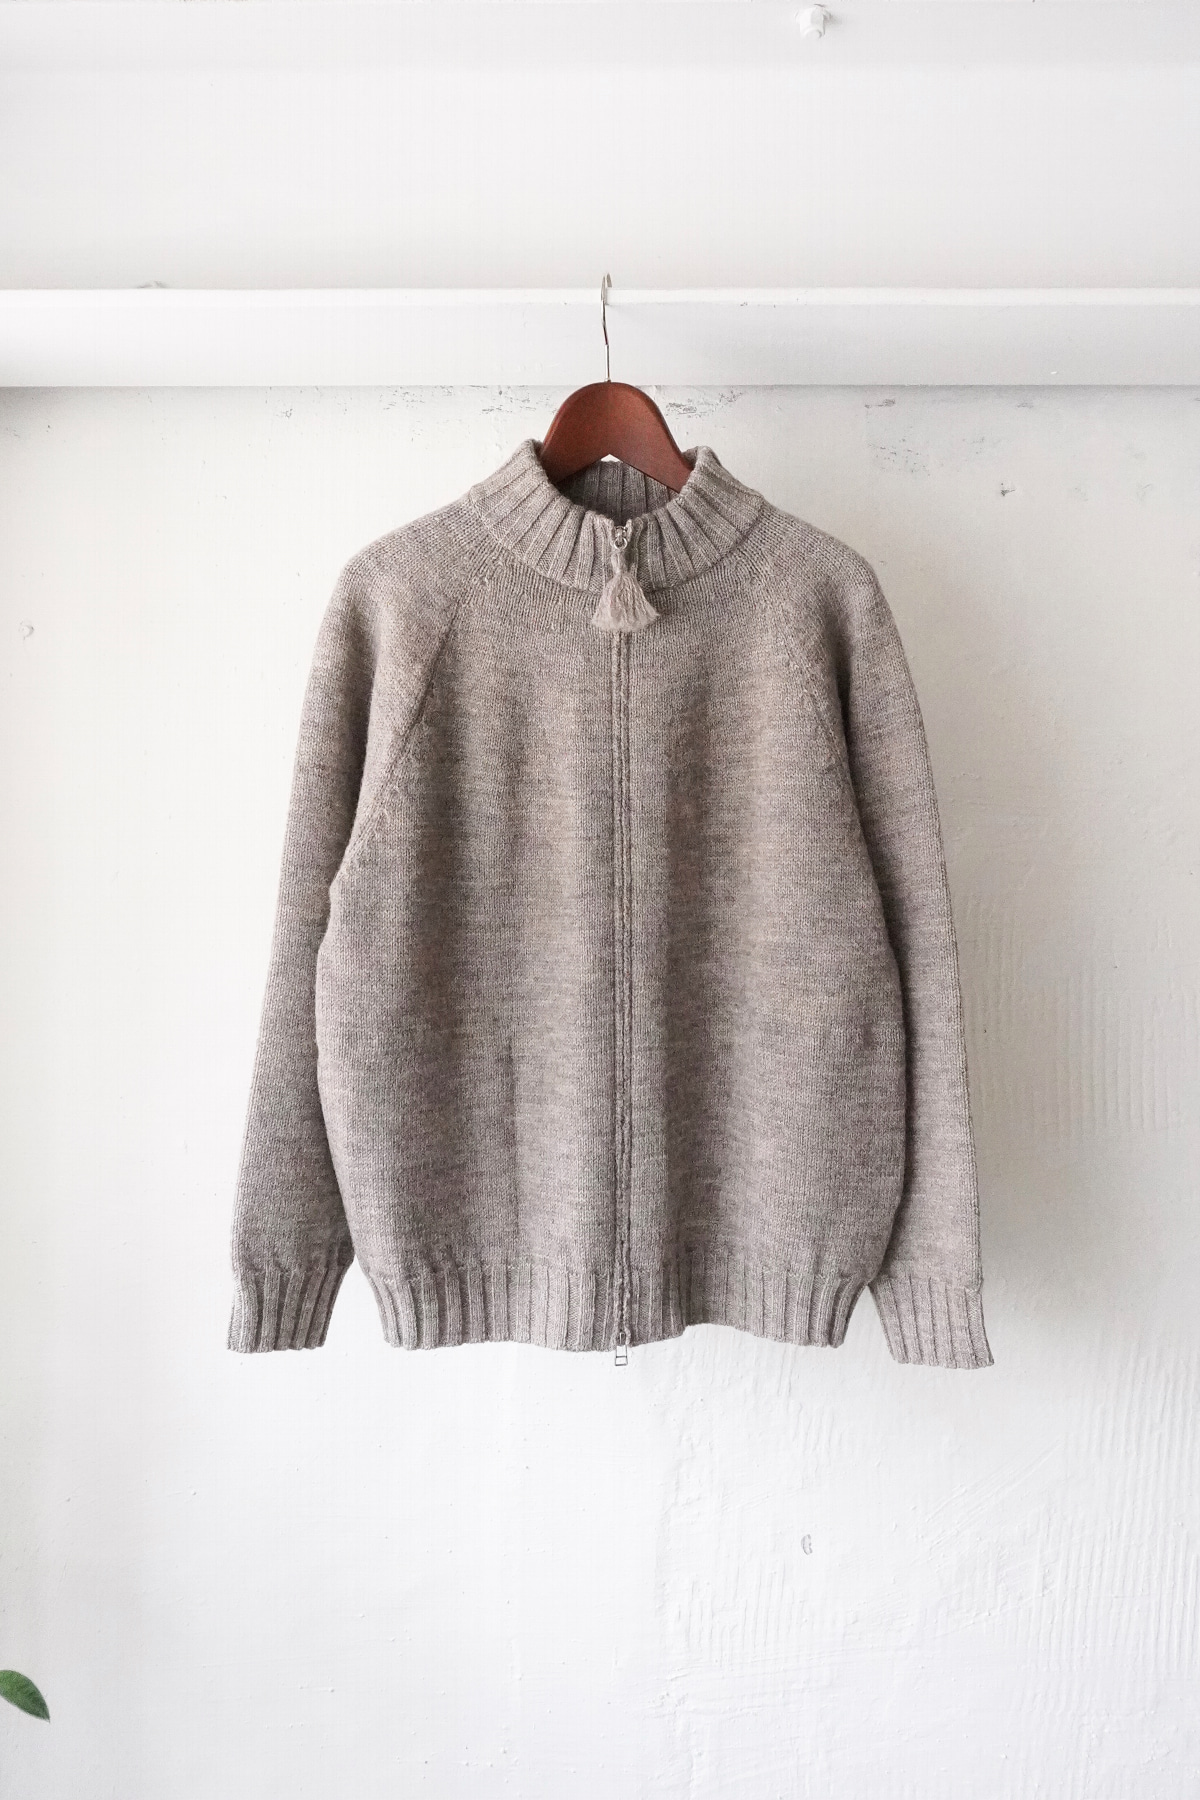 [OLD JOE BRAND] Tweedy Yarn Zip Sweater - Mink